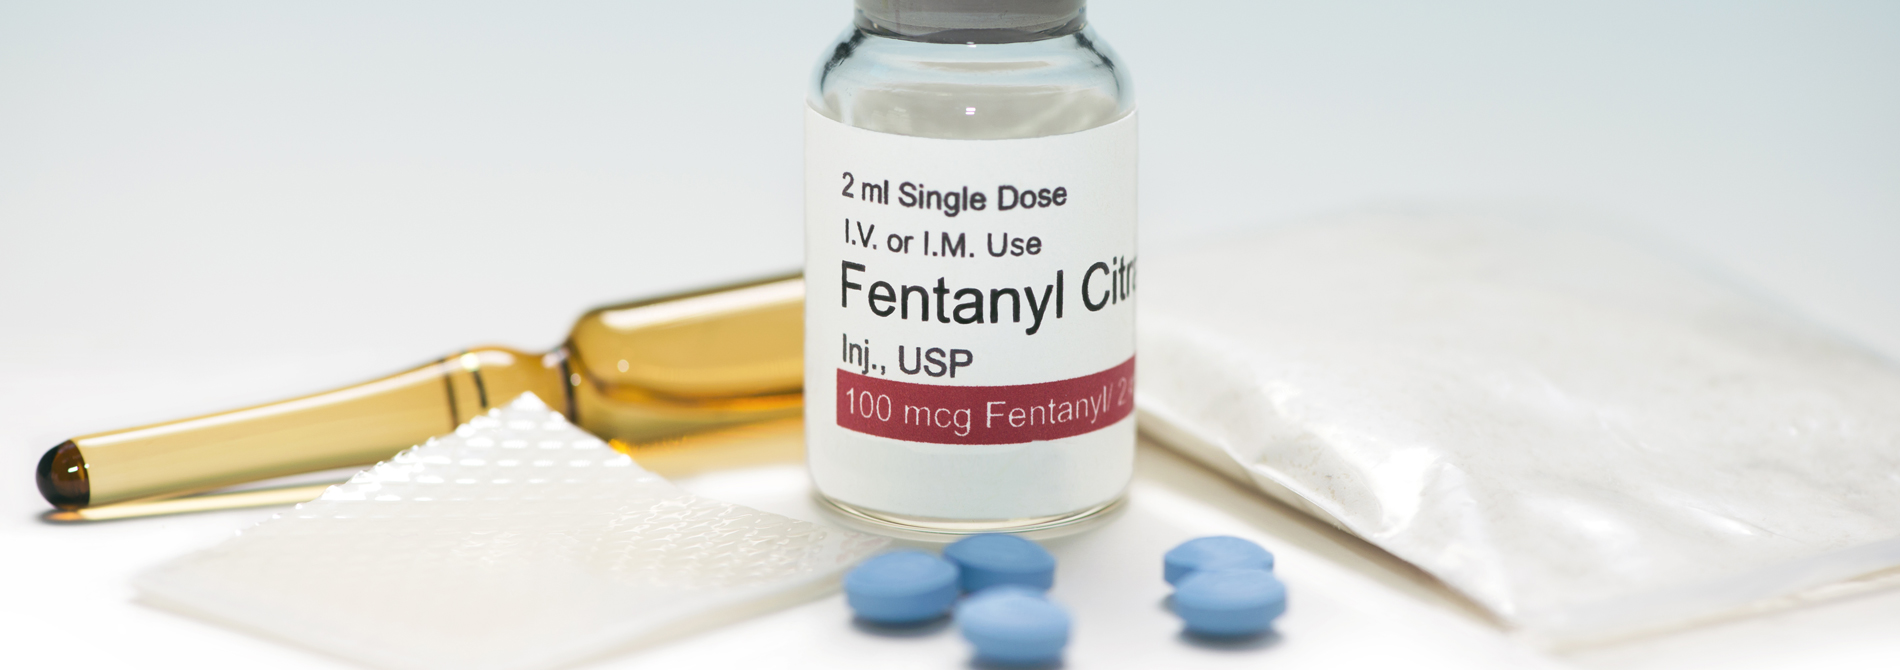 Fentanyl and Combat medicine